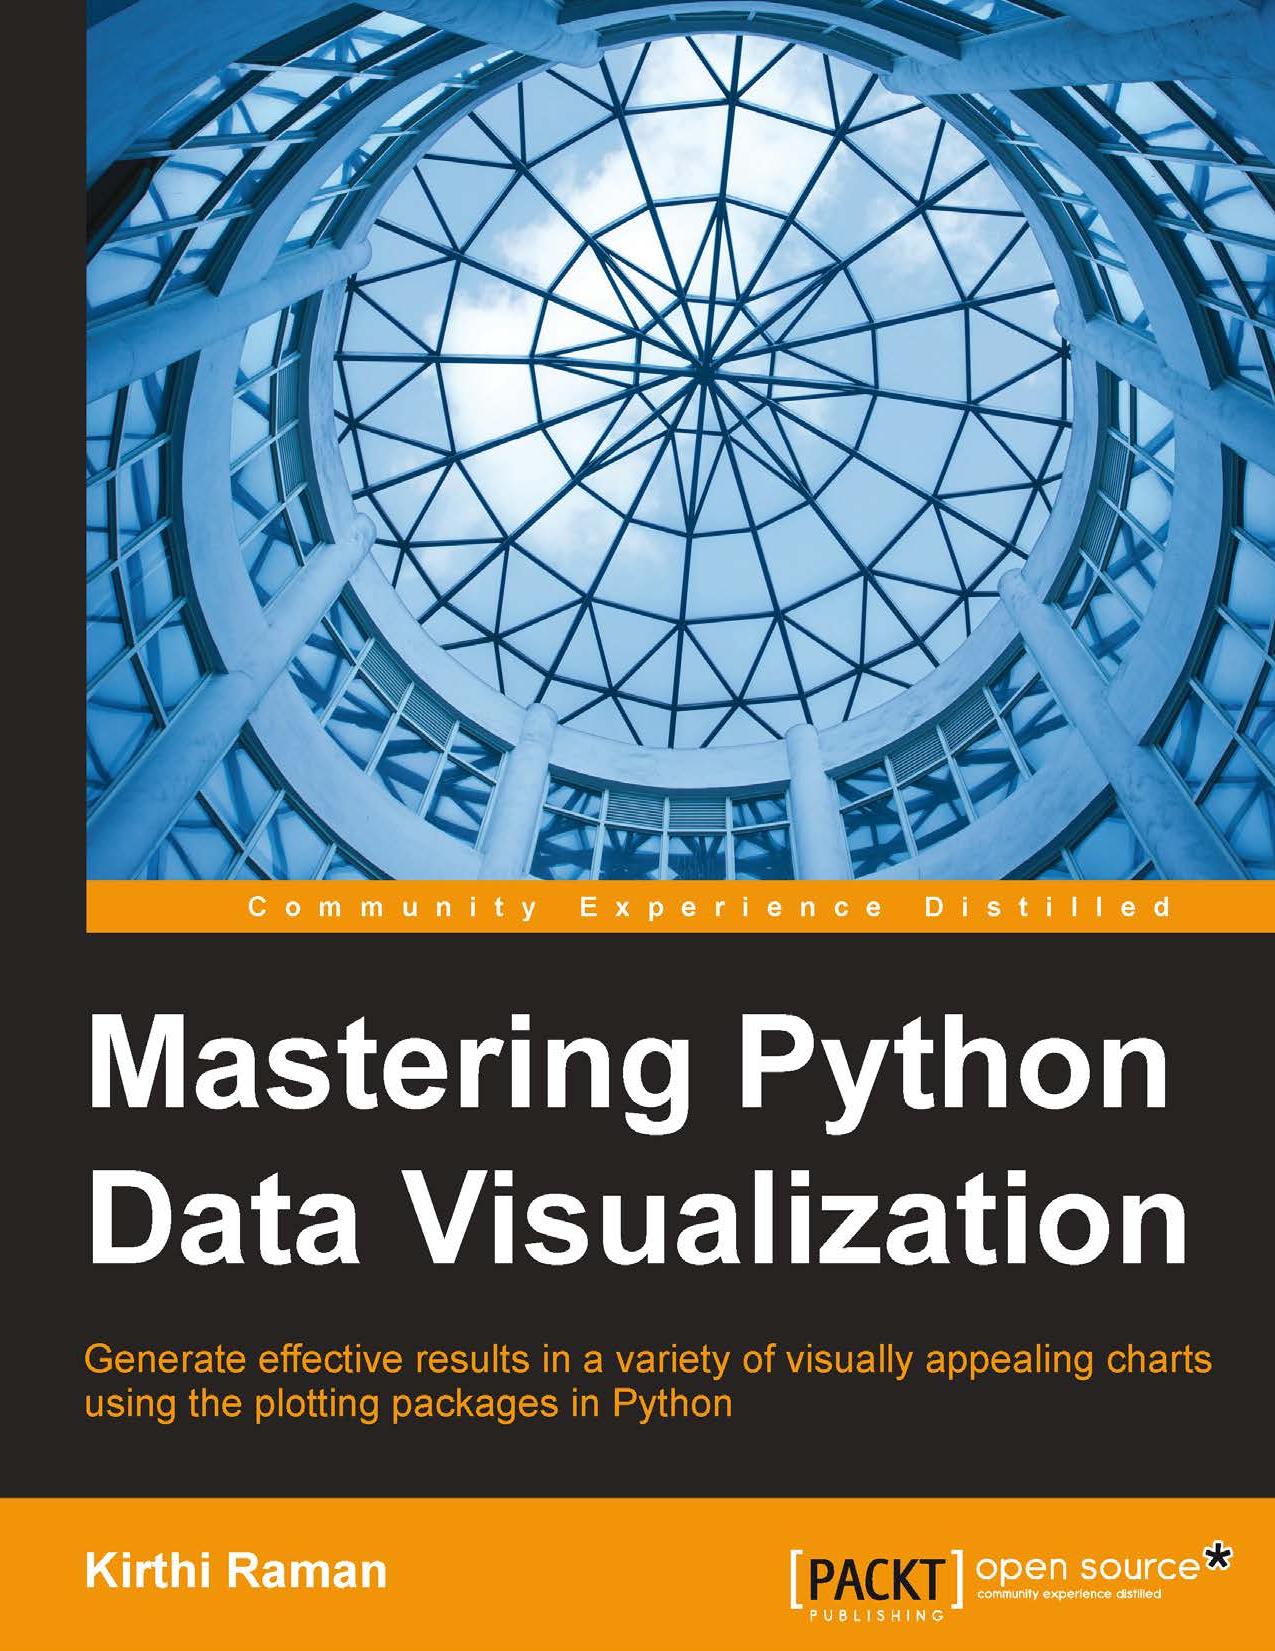 Mastering Python Data Visualization by Kirthi Raman